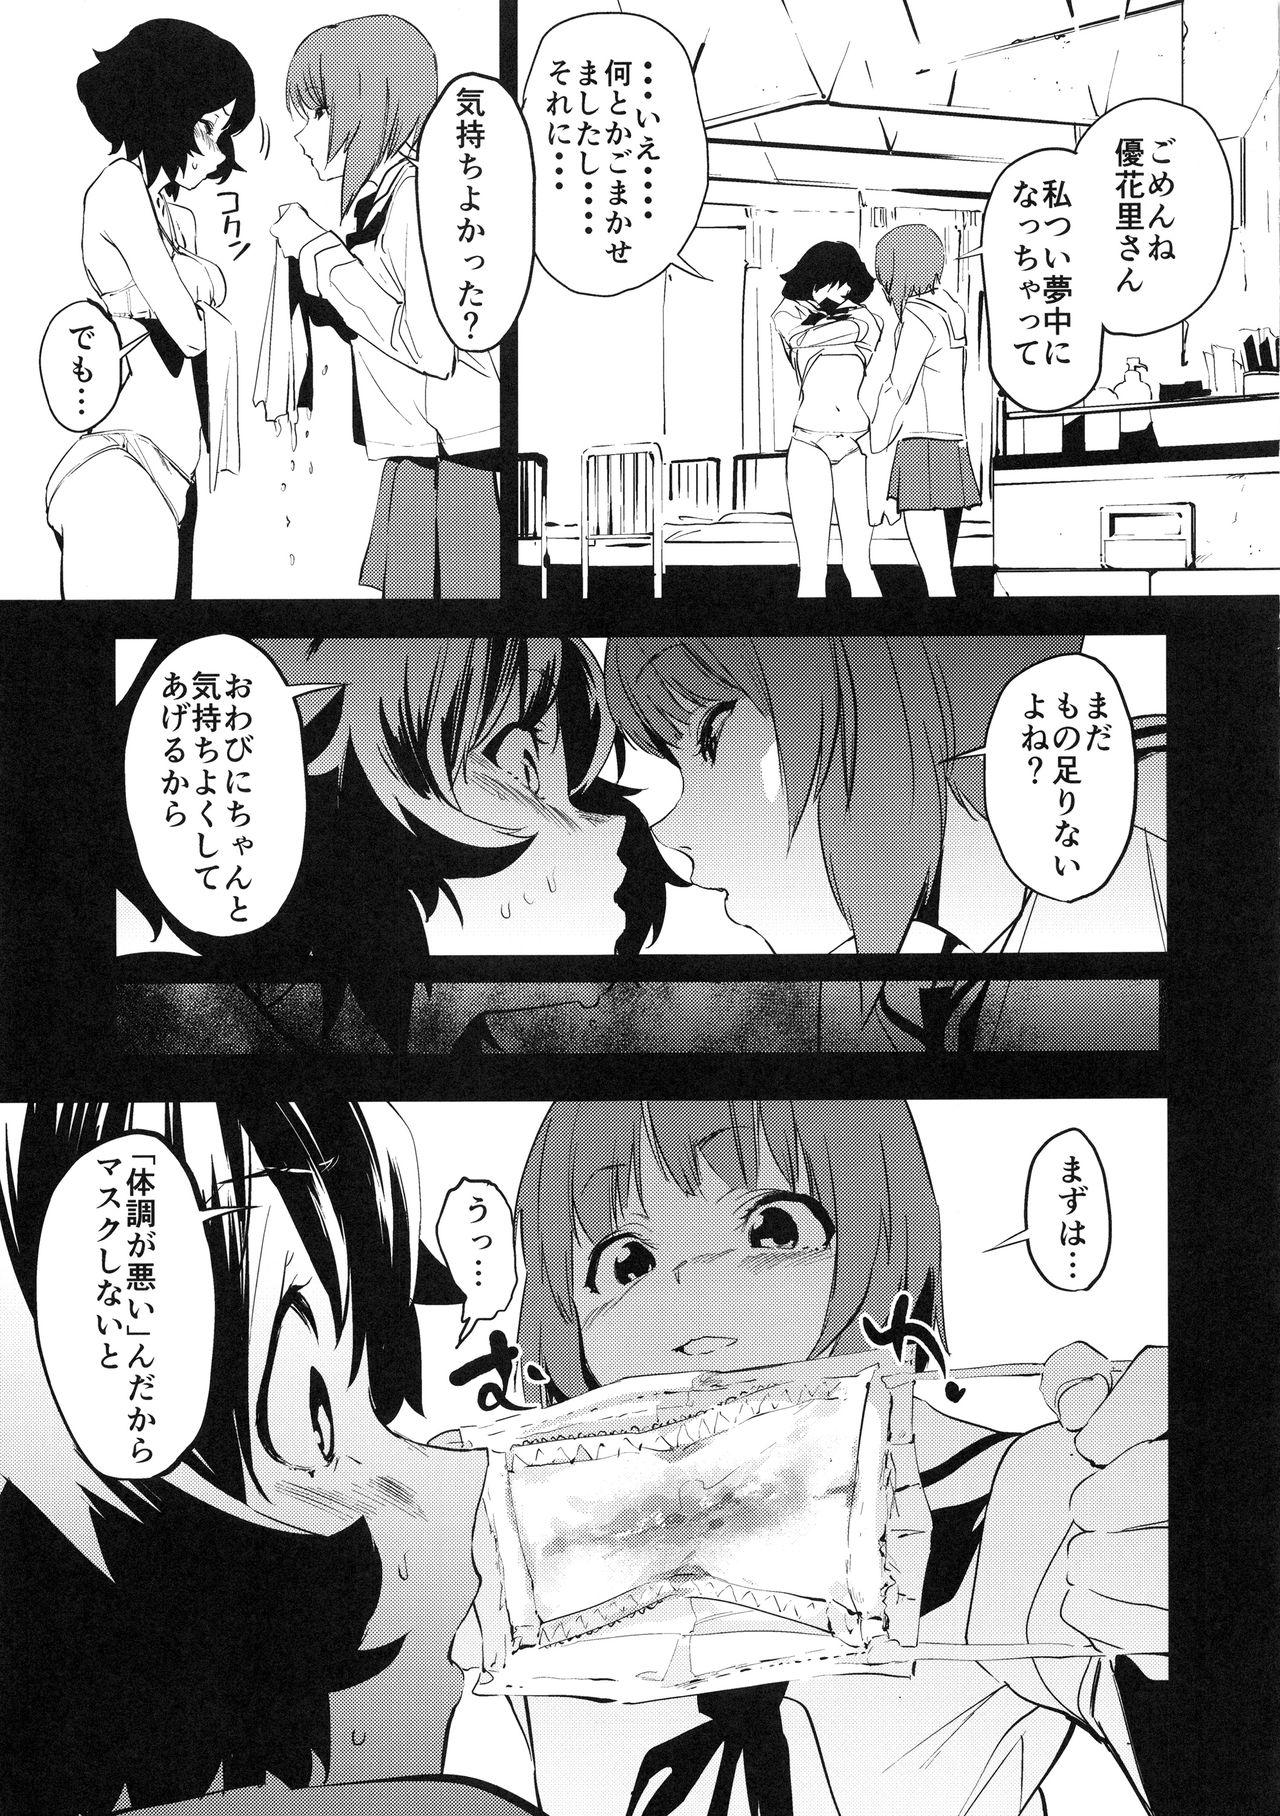 Cachonda Private Akiyama 3 - Girls und panzer Chichona - Page 12